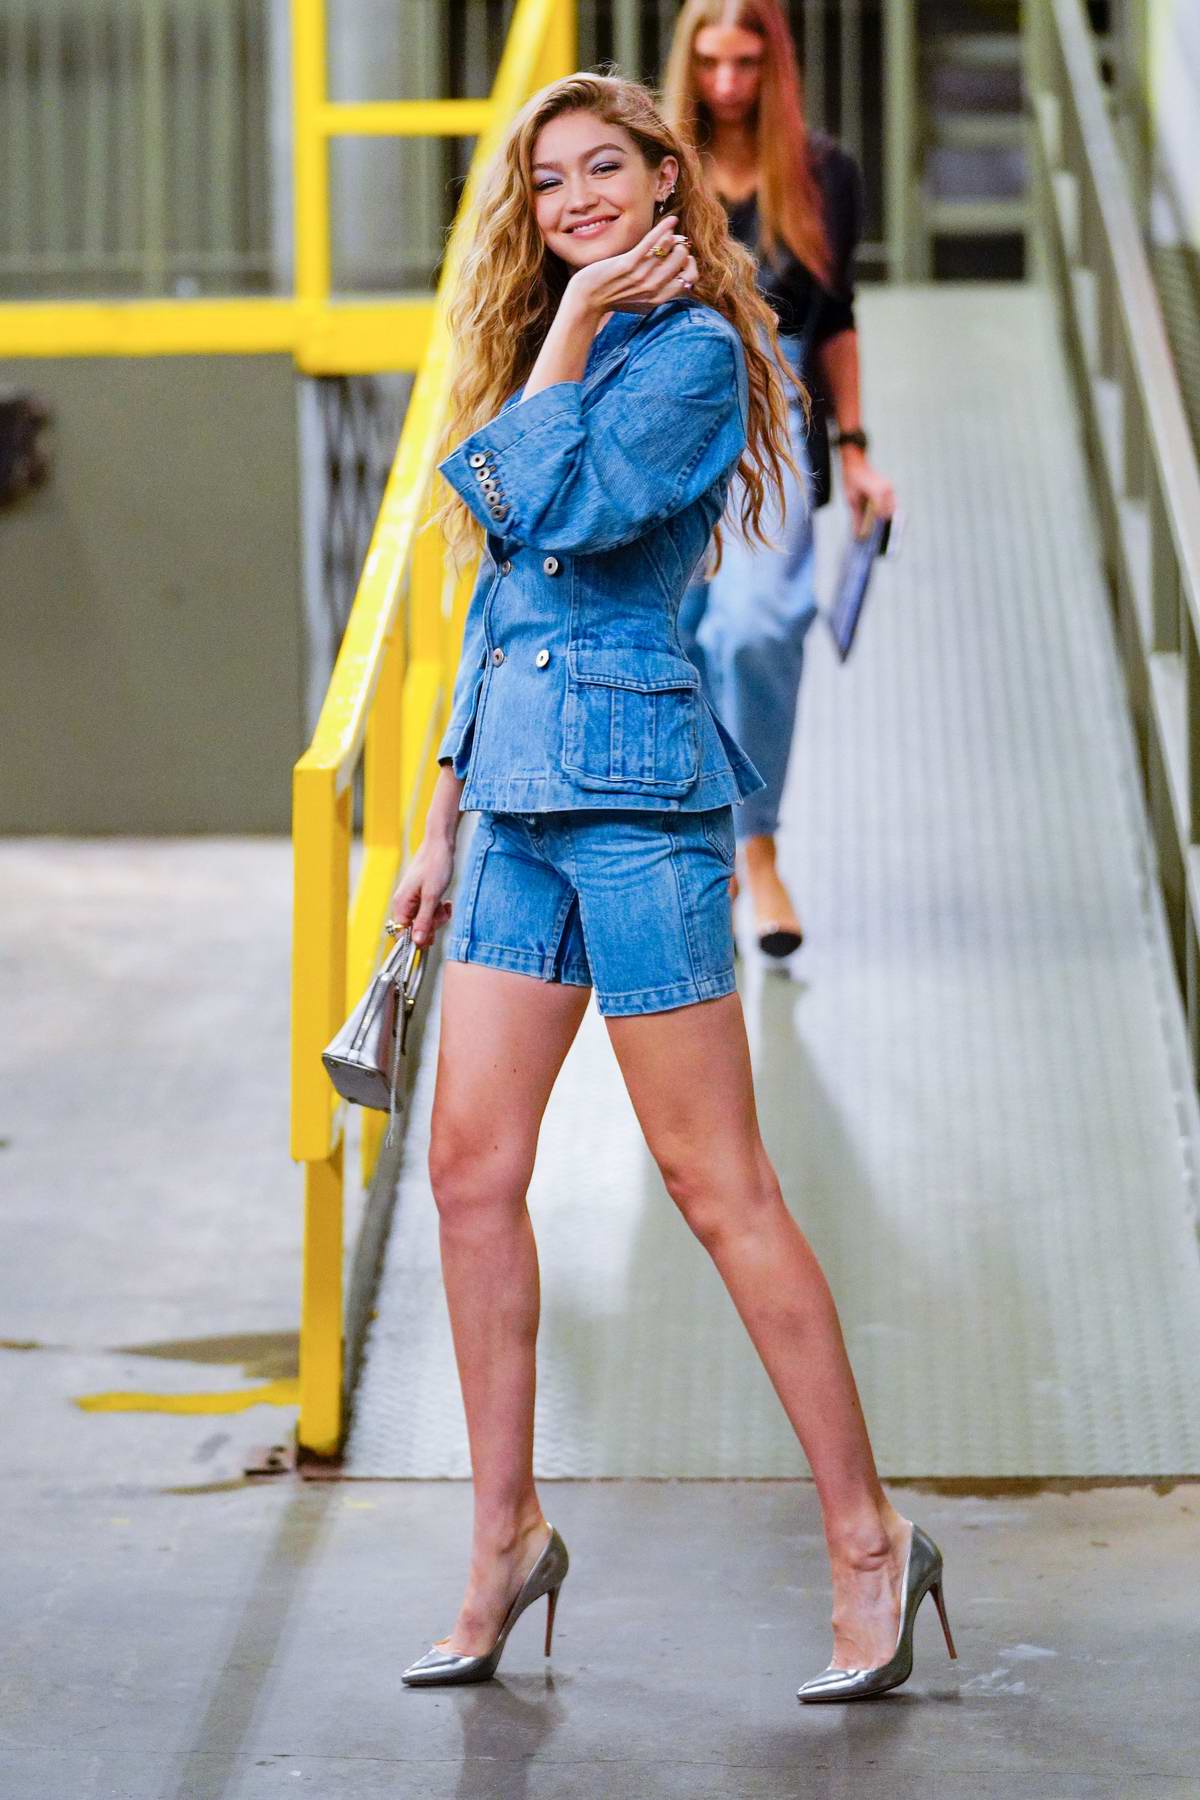 Alessandra Ambrosio wears a white top and aqua blue leggings as